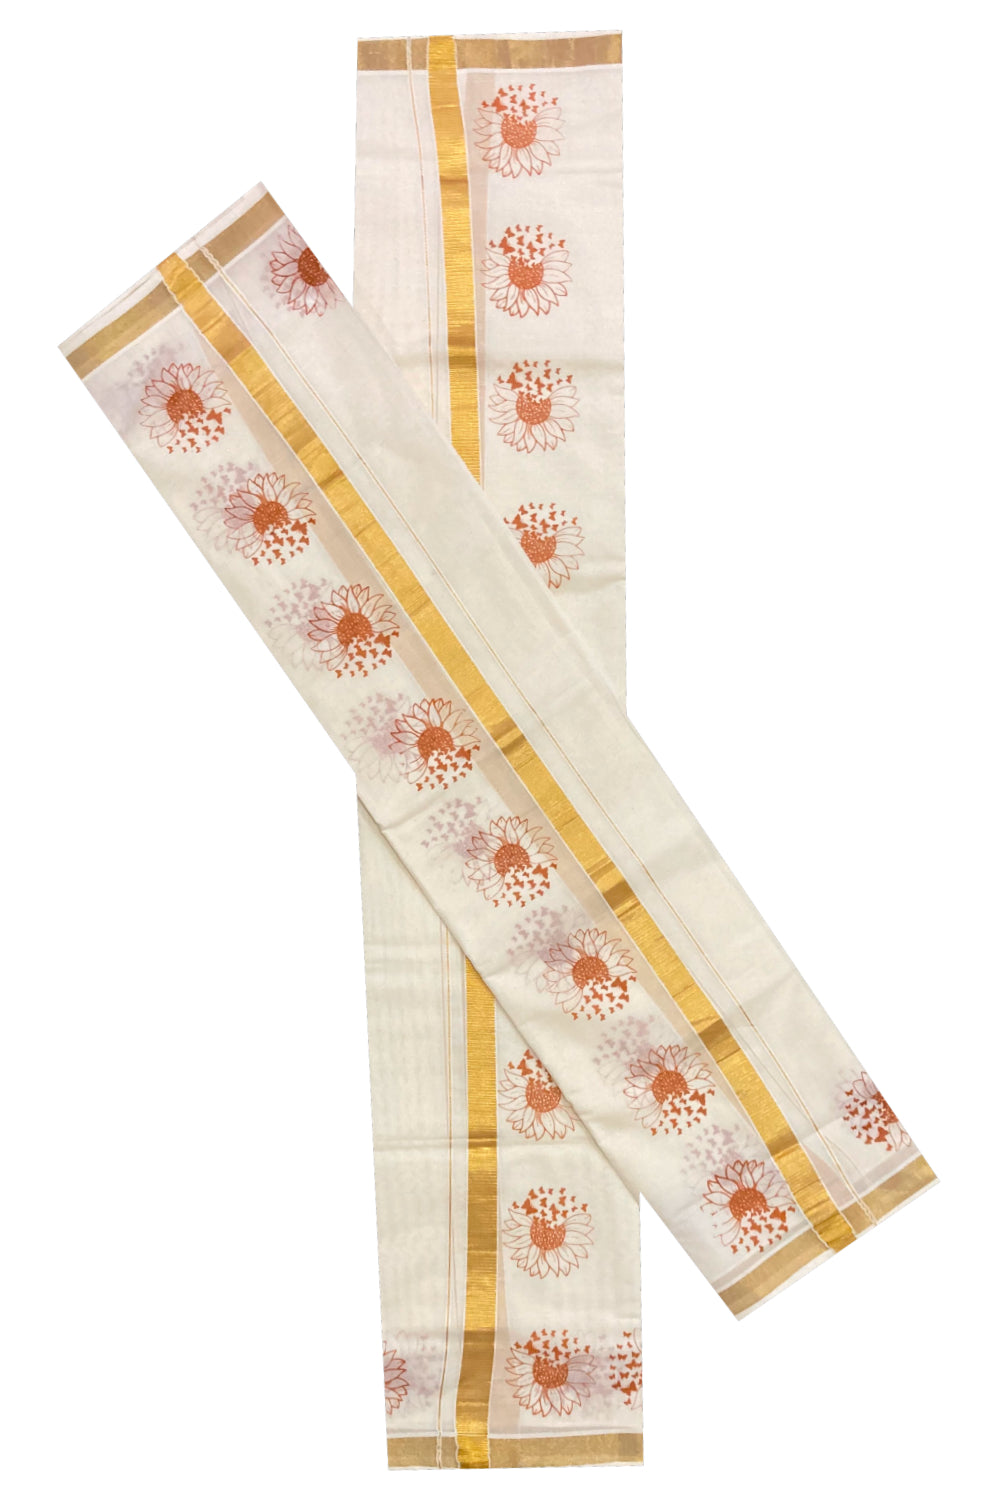 Kerala Cotton Kasavu Set Mundu (Mundum Neriyathum) with Light Brown Block Prints on Border